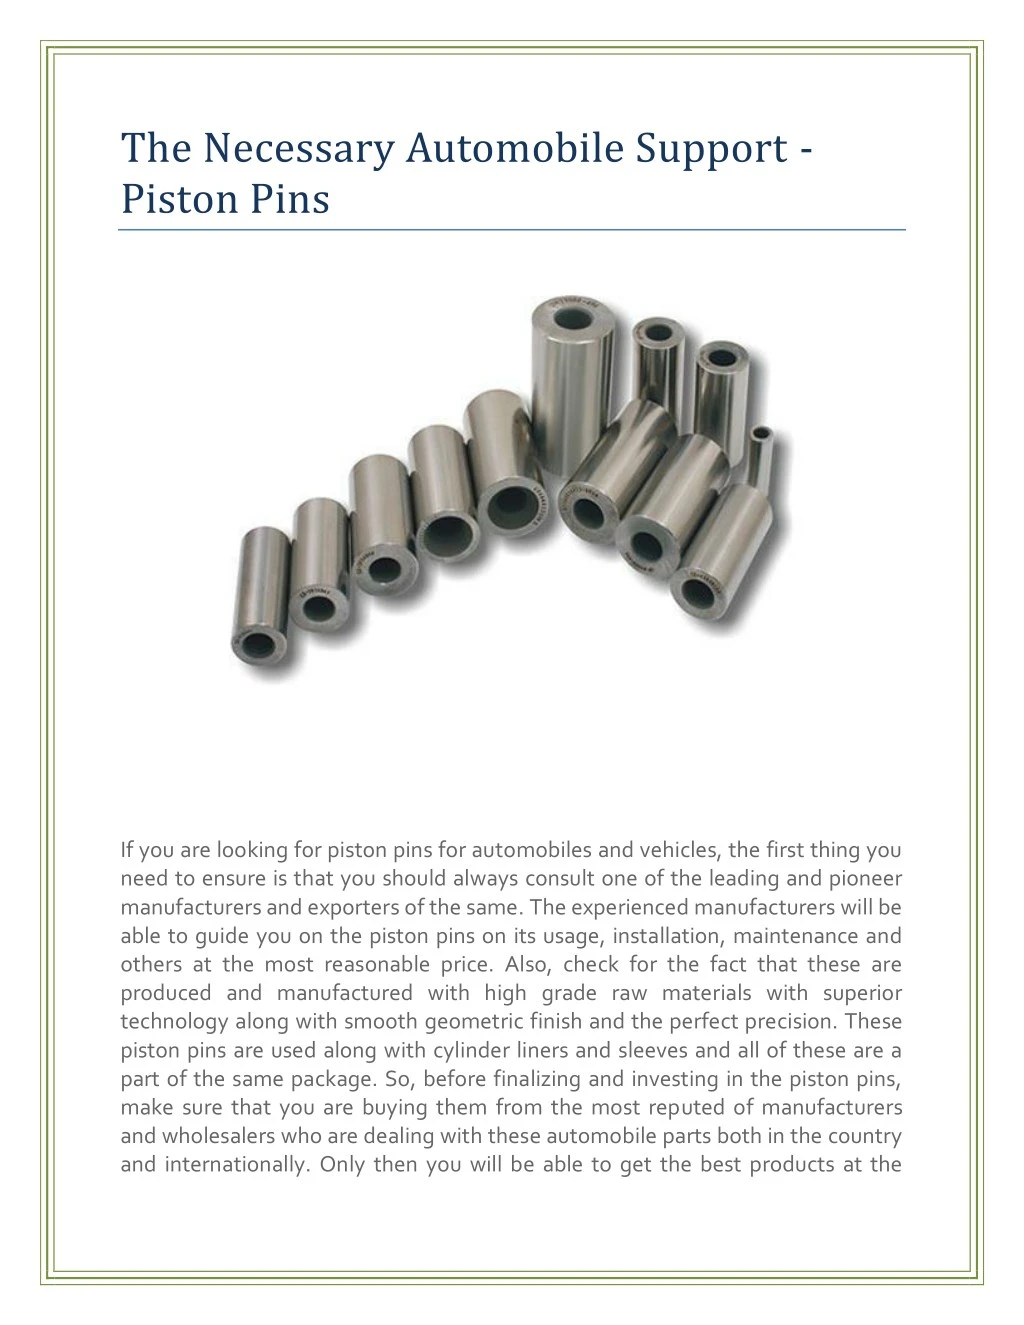 the necessary automobile support piston pins